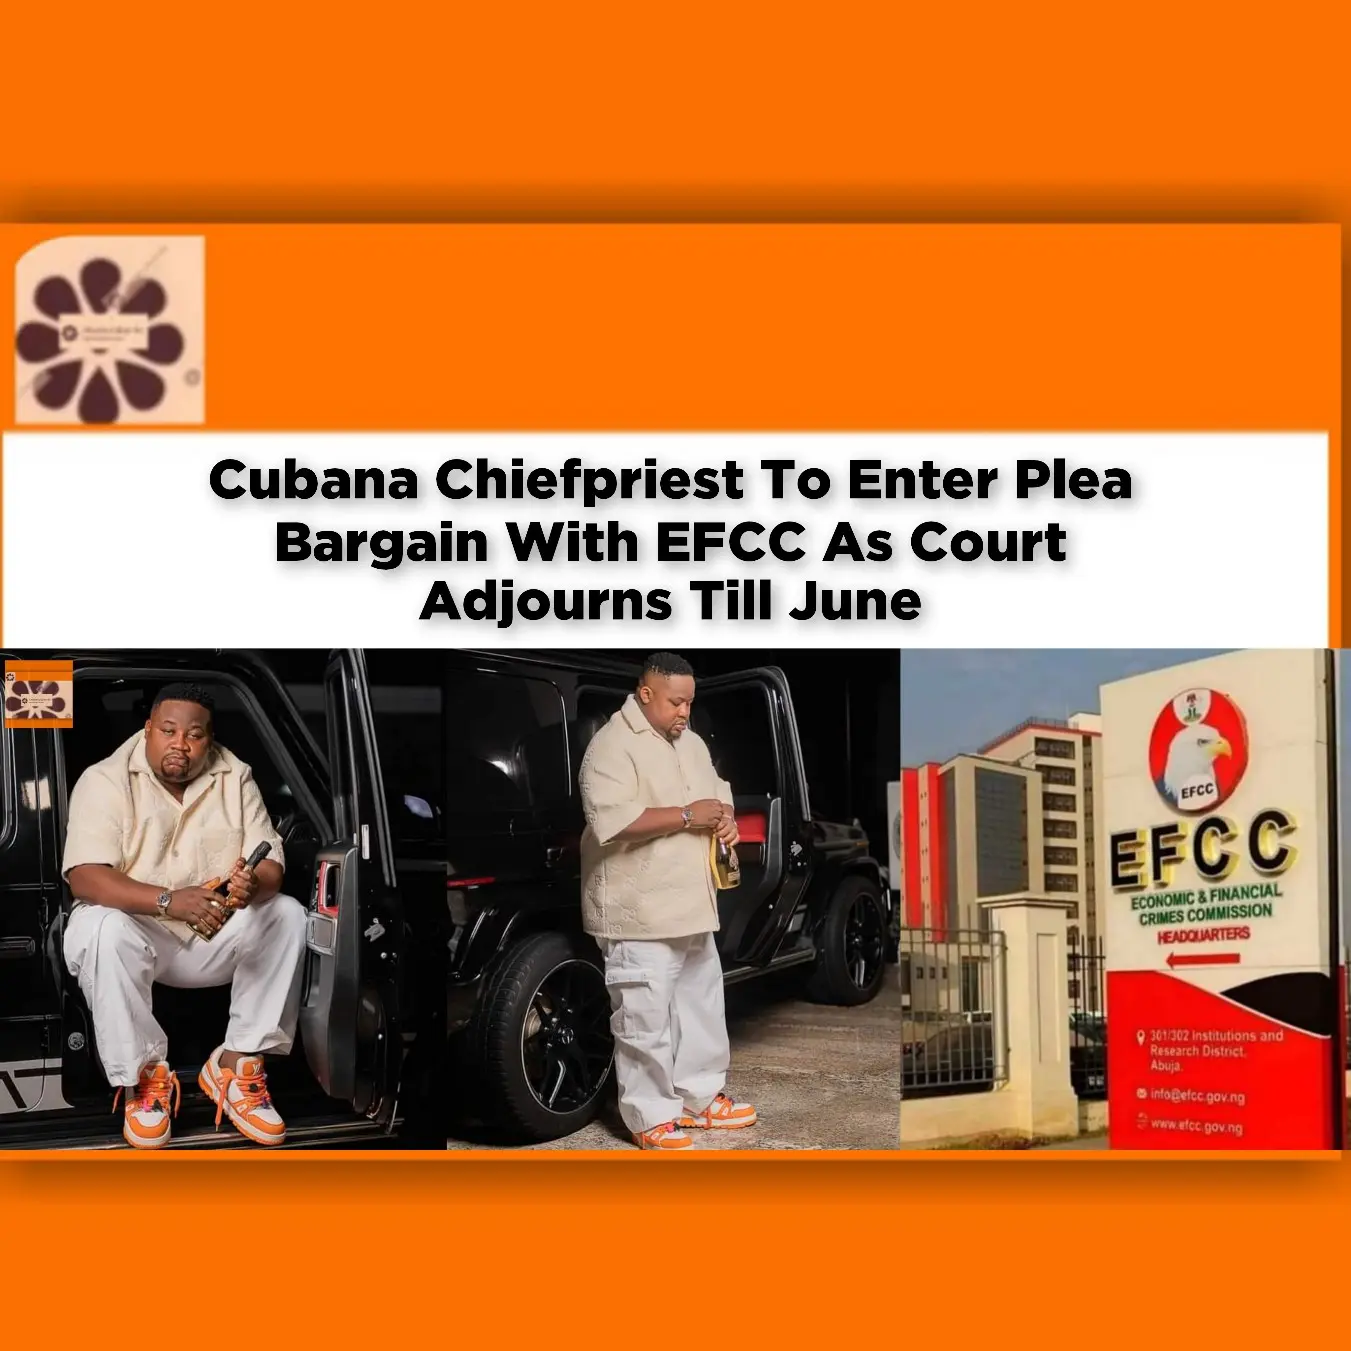 Cubana Chiefpriest To Enter Plea Bargain With EFCC As Court Adjourns Till June ~ OsazuwaAkonedo #ChiefPriest #Cubana #EFCC #Naira